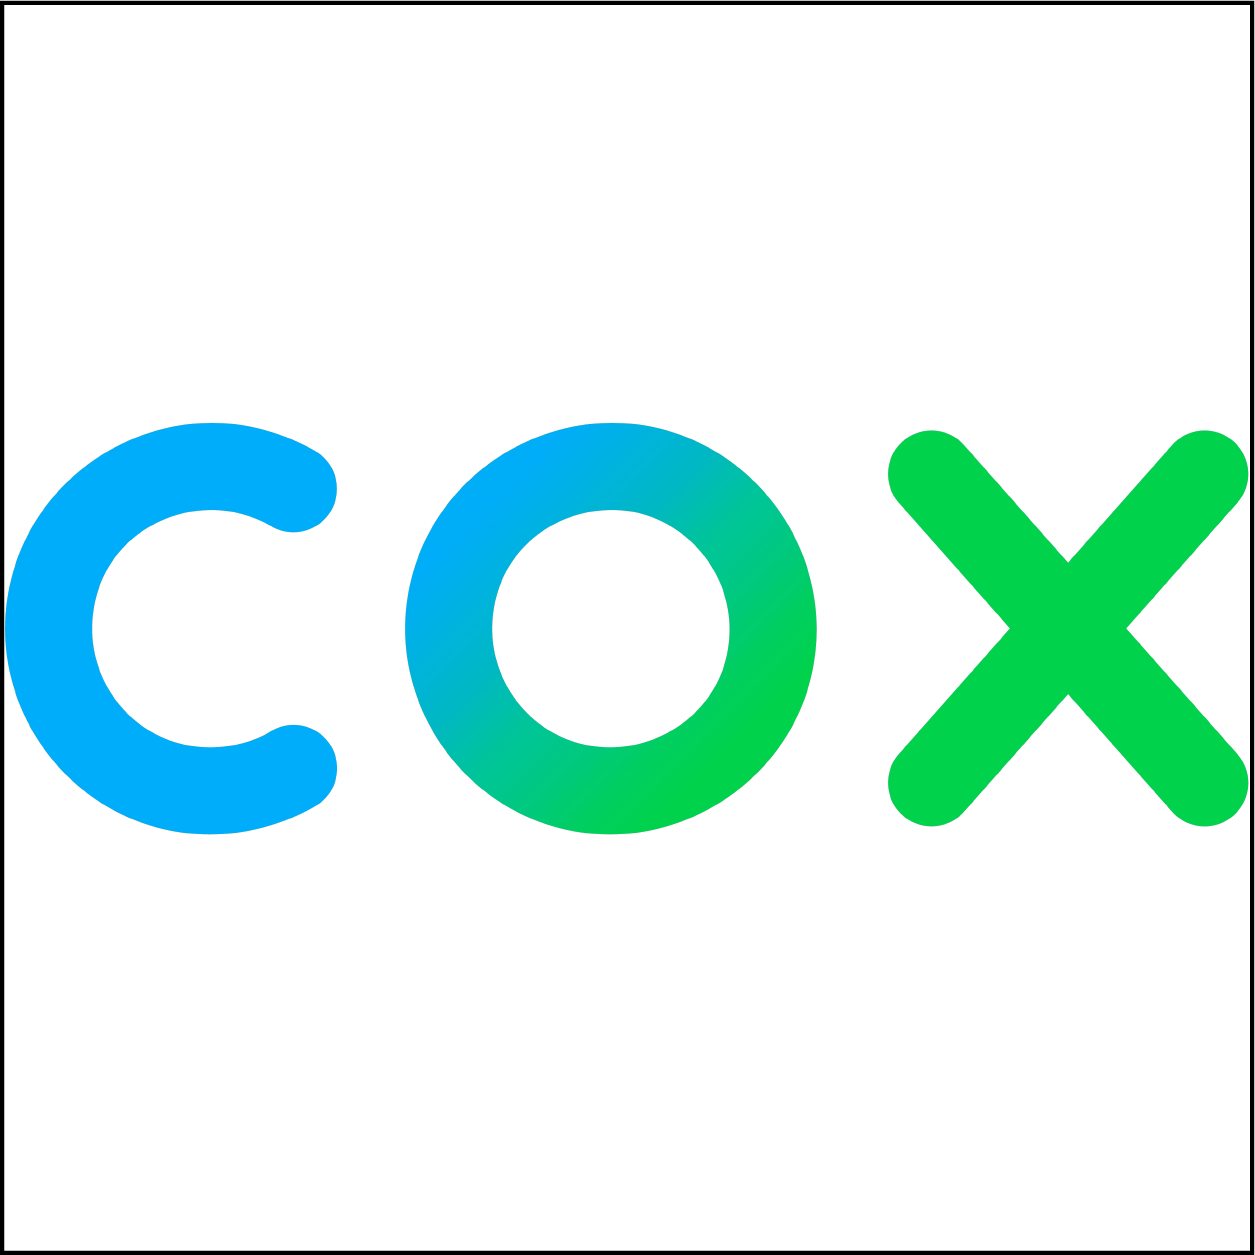 Sponsorpitch & Cox Communications